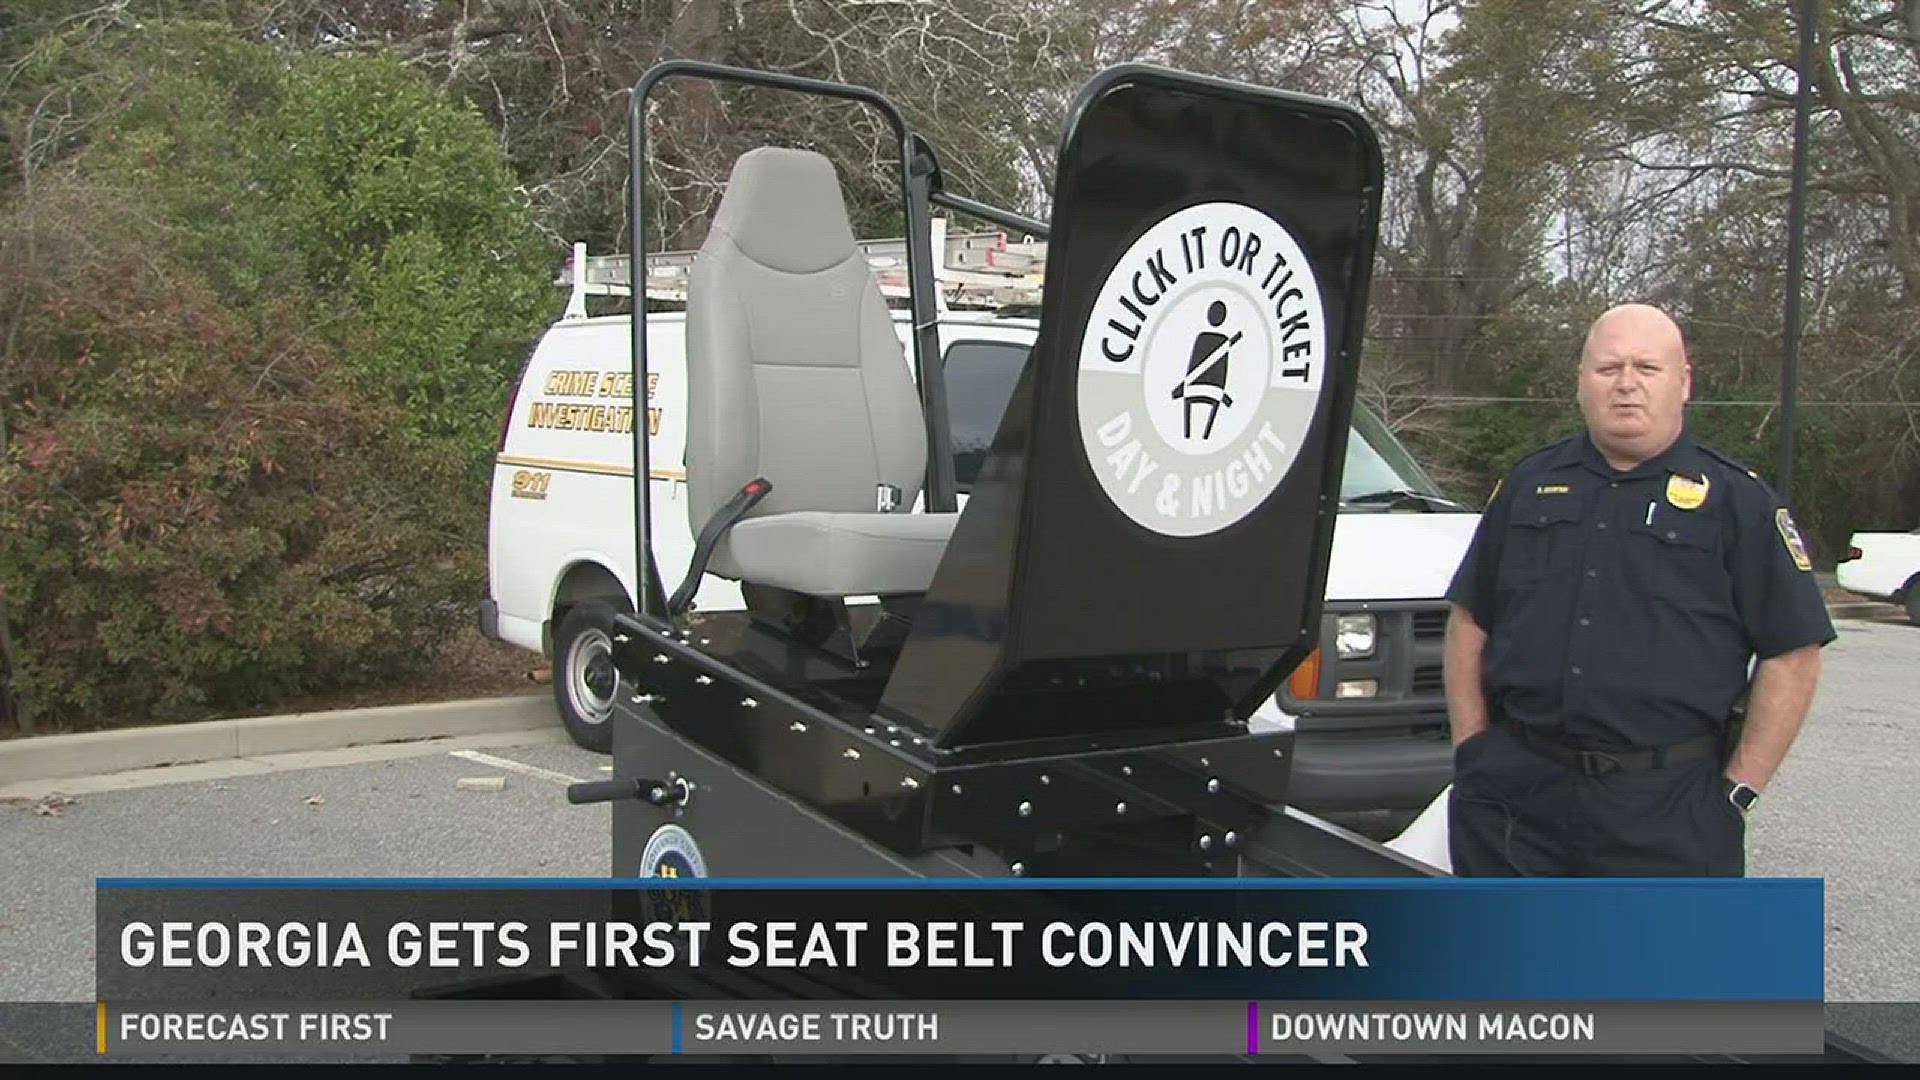 Georgia gets first Seat Belt Convincer